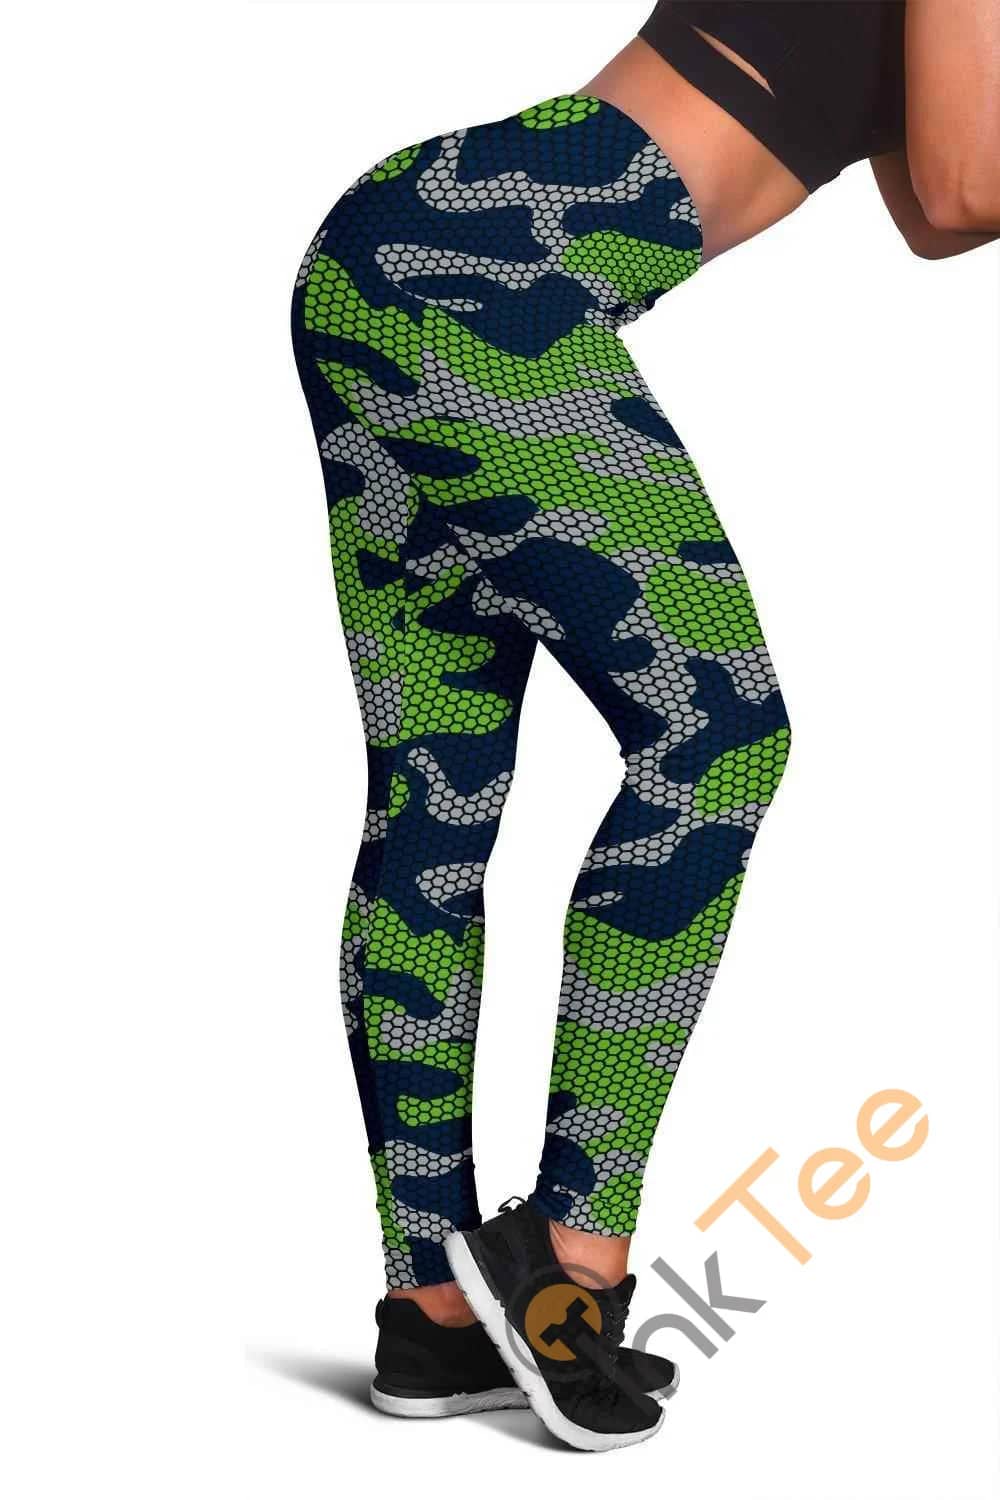 Seattle Seahawks Inspired Hex Camo 3D All Over Print For Yoga Fitness Fashion Women'S Leggings